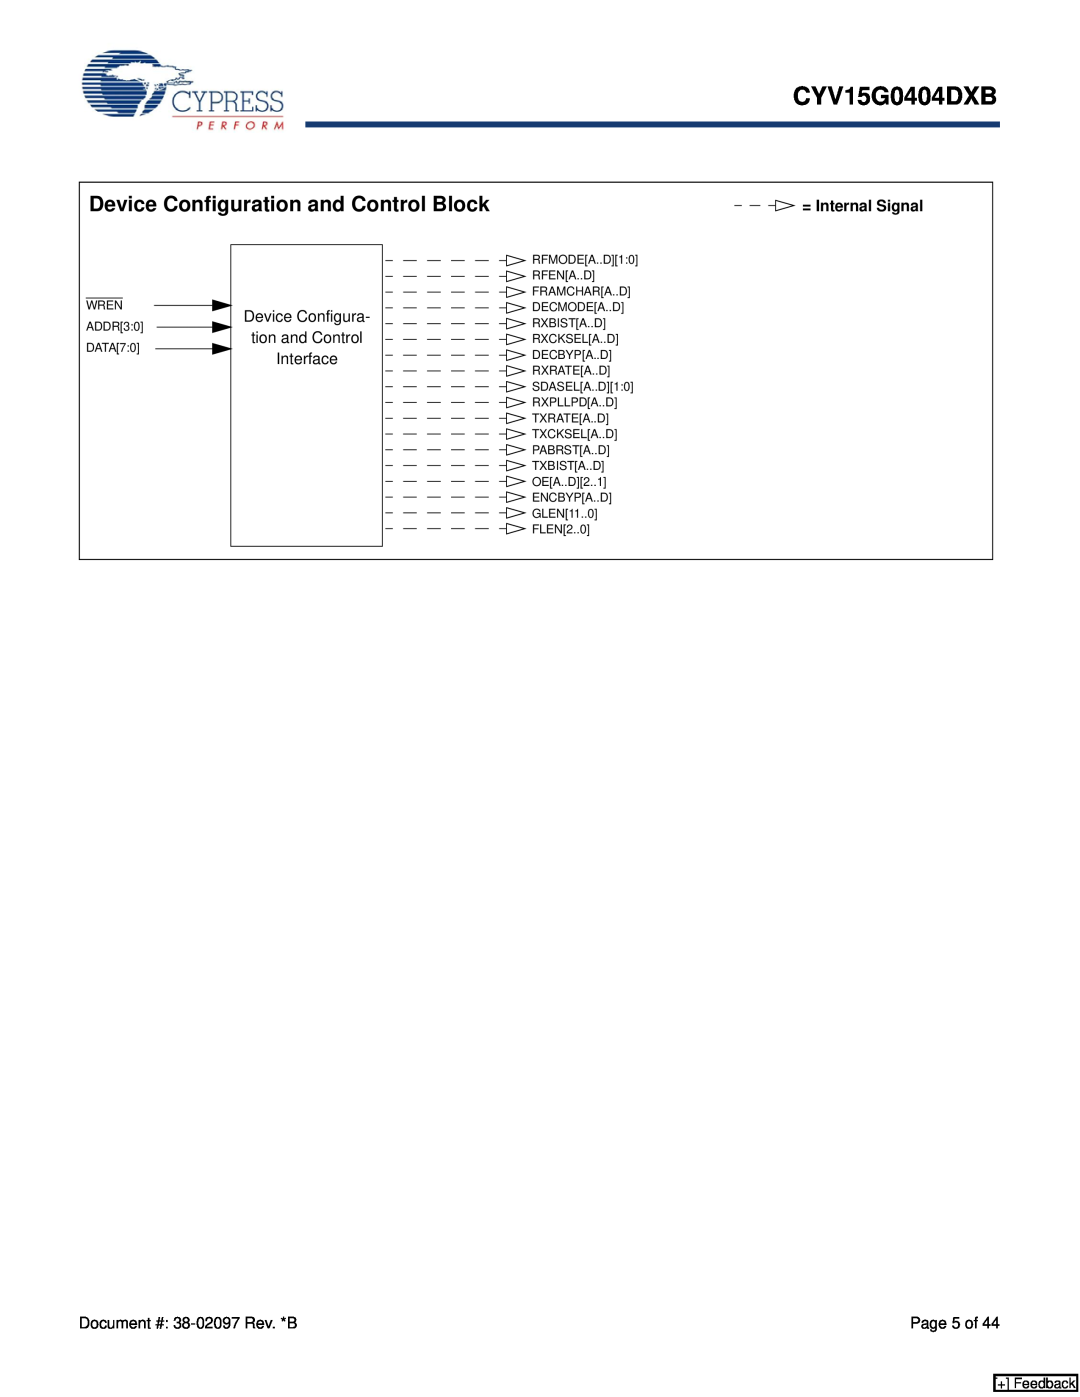 Cypress CYV15G0404DXB manual Device Configuration and Control Block, = Internal Signal, + Feedback 